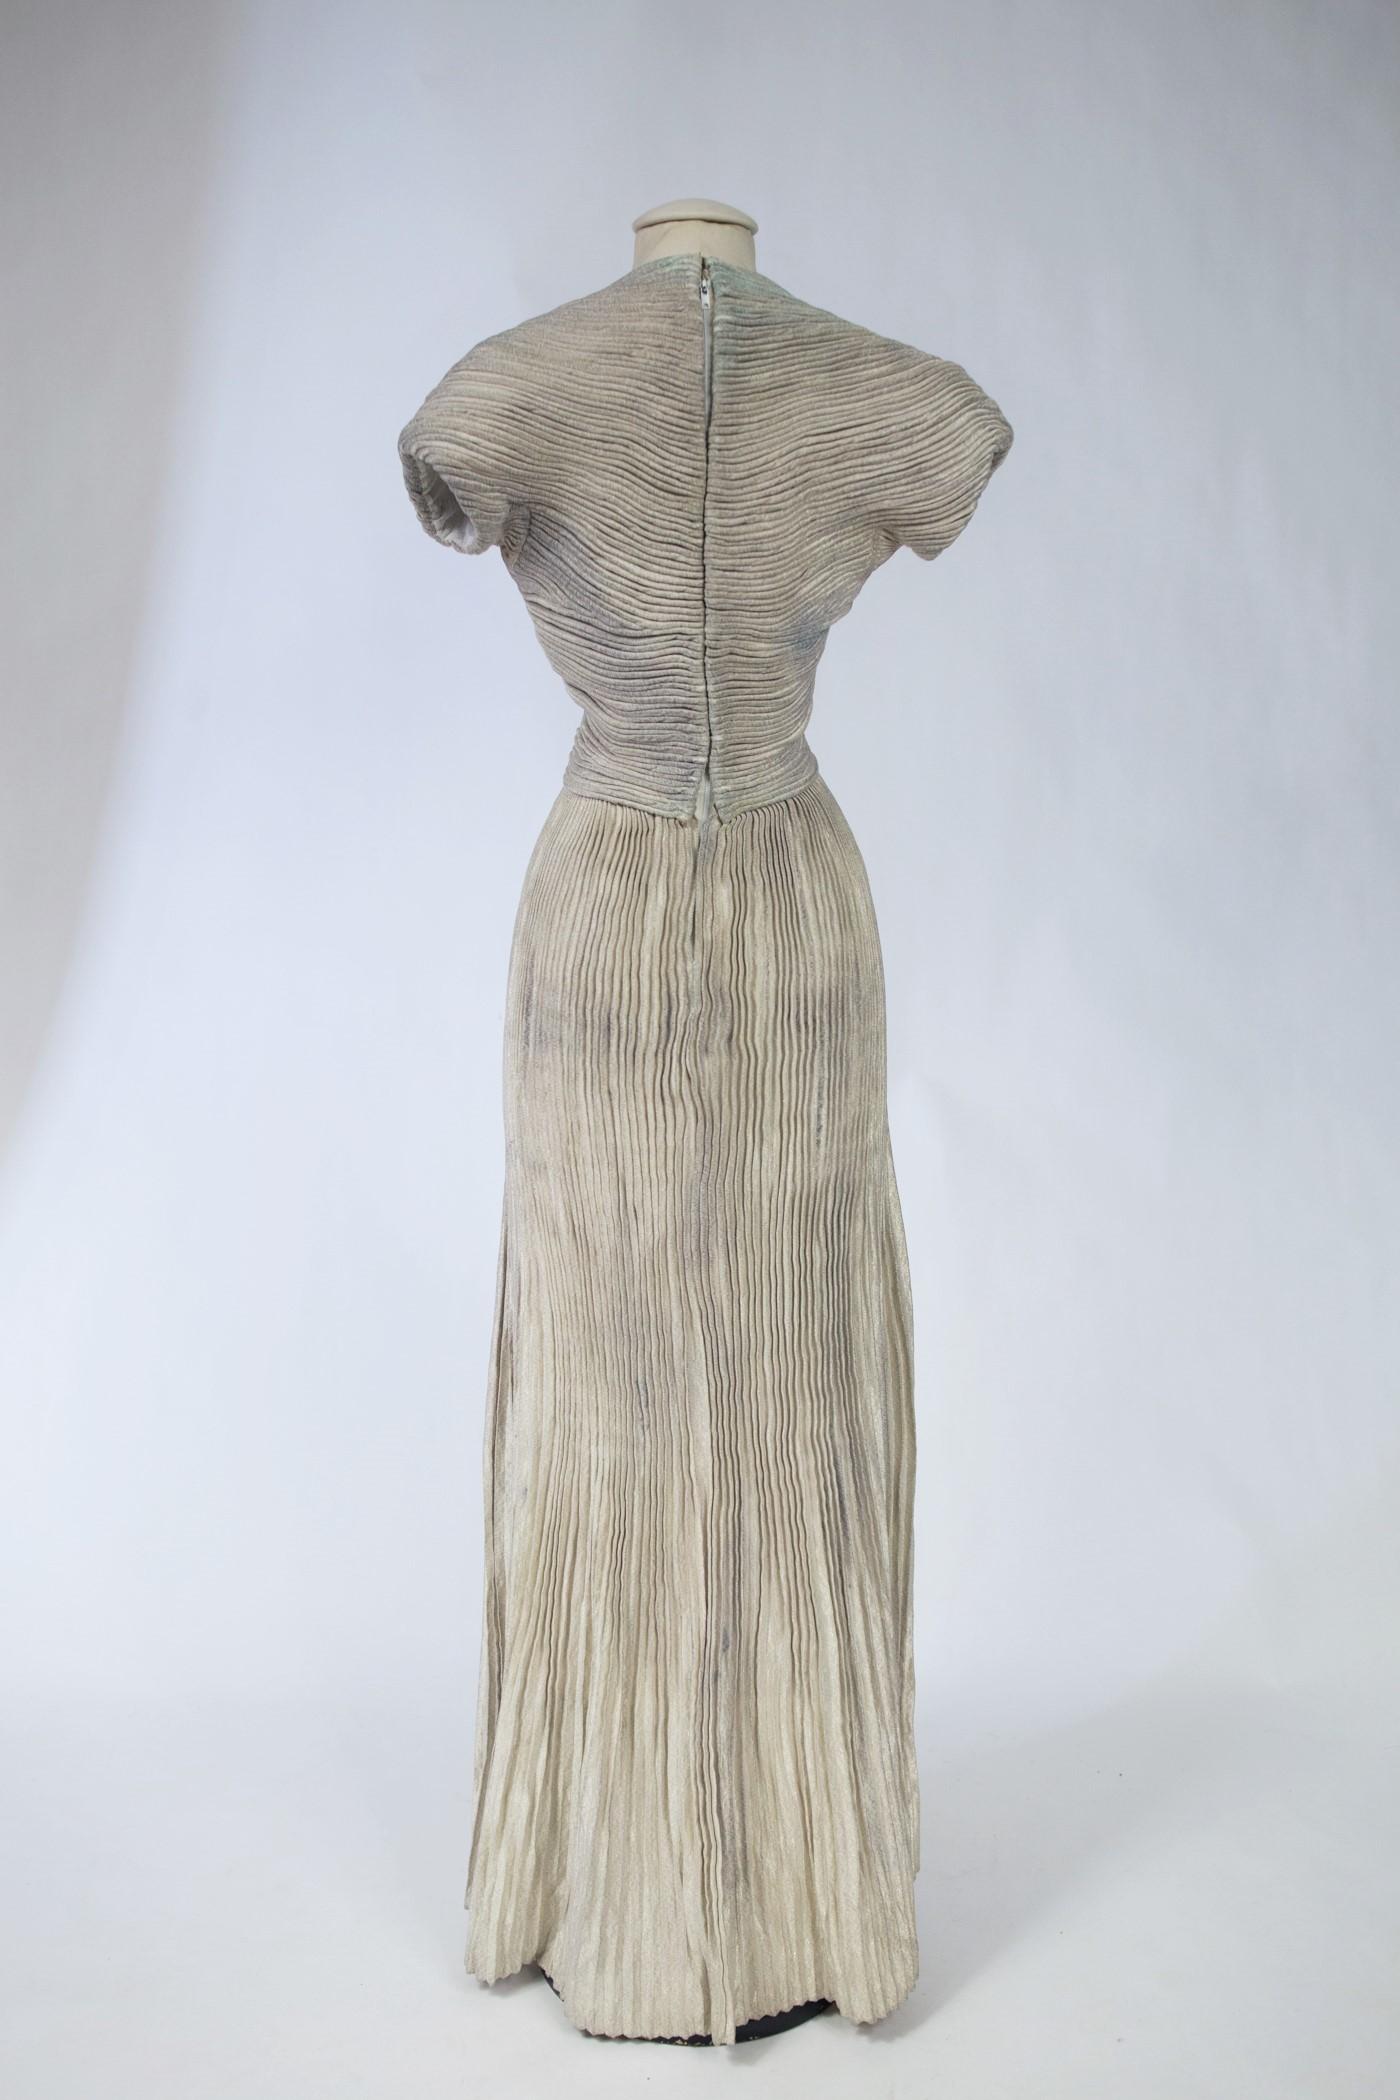 A Silver Lamé Evening Dress by Lucile Manguin - France Haute Couture Circa 1940 For Sale 4